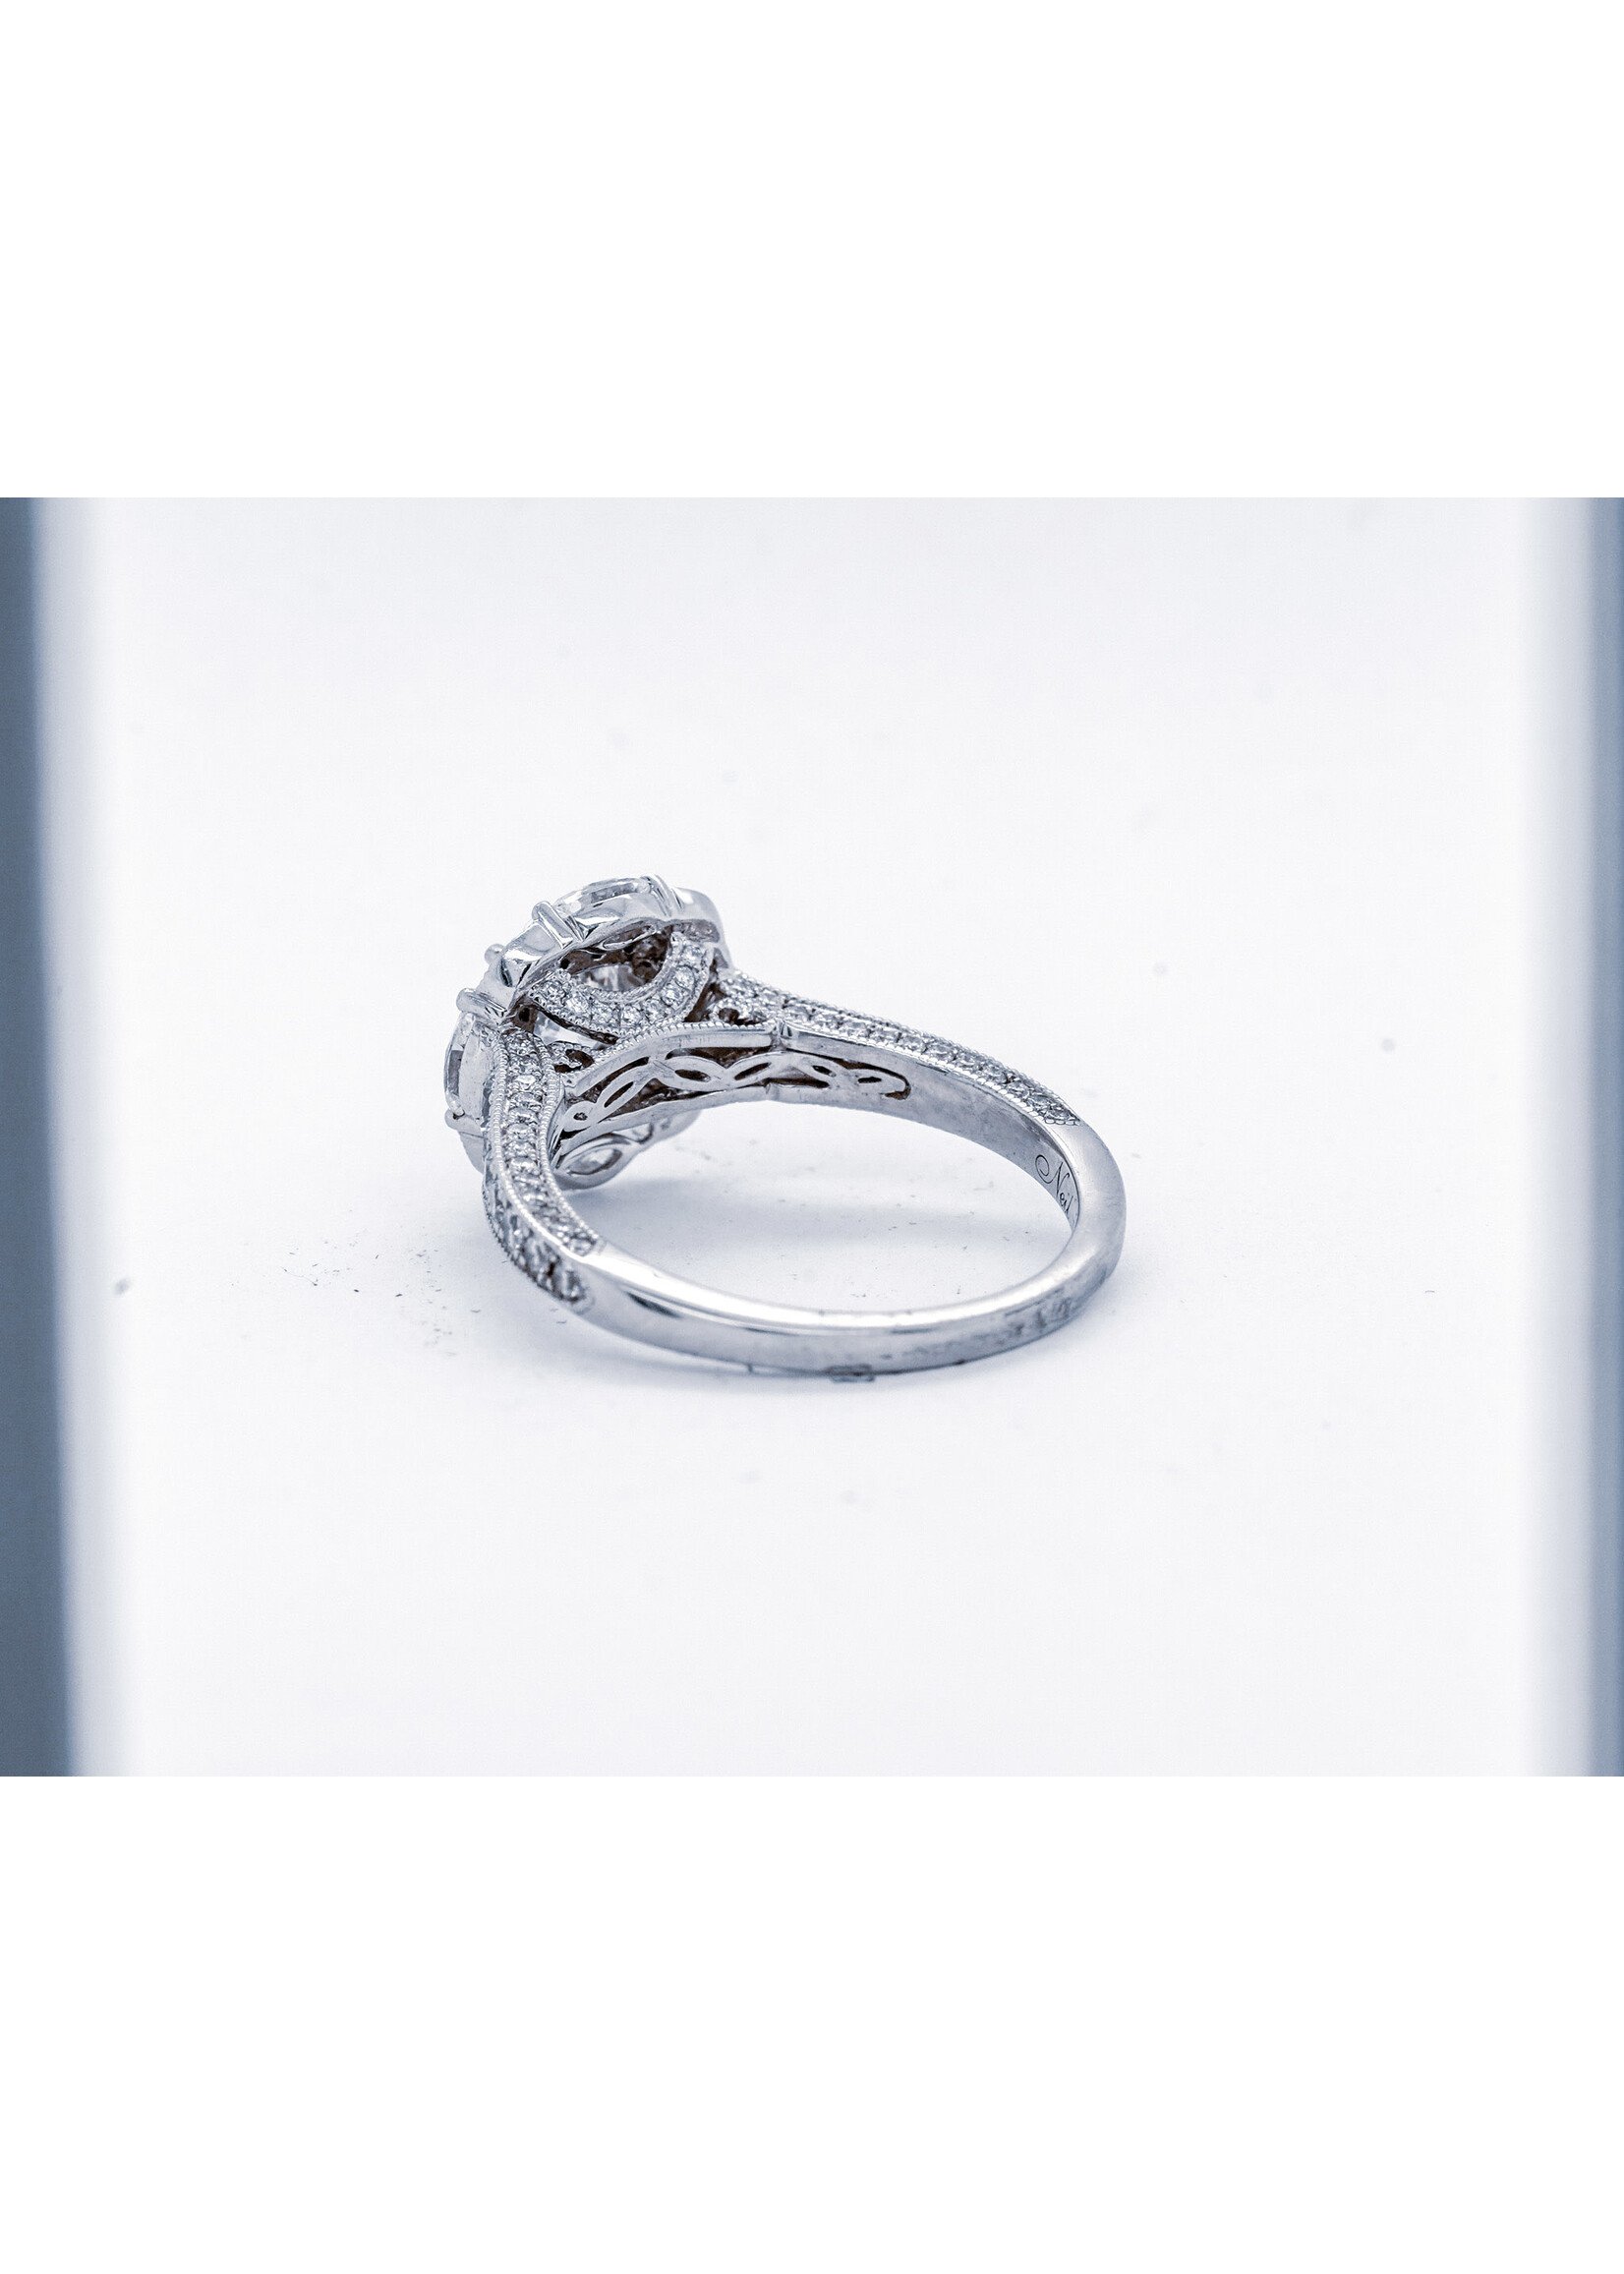 14KW 4.0g 1.73ctw (0.73ctr) G/SI2 Neil Lane Cushion Diamond Halo Engagement Ring (size 7)